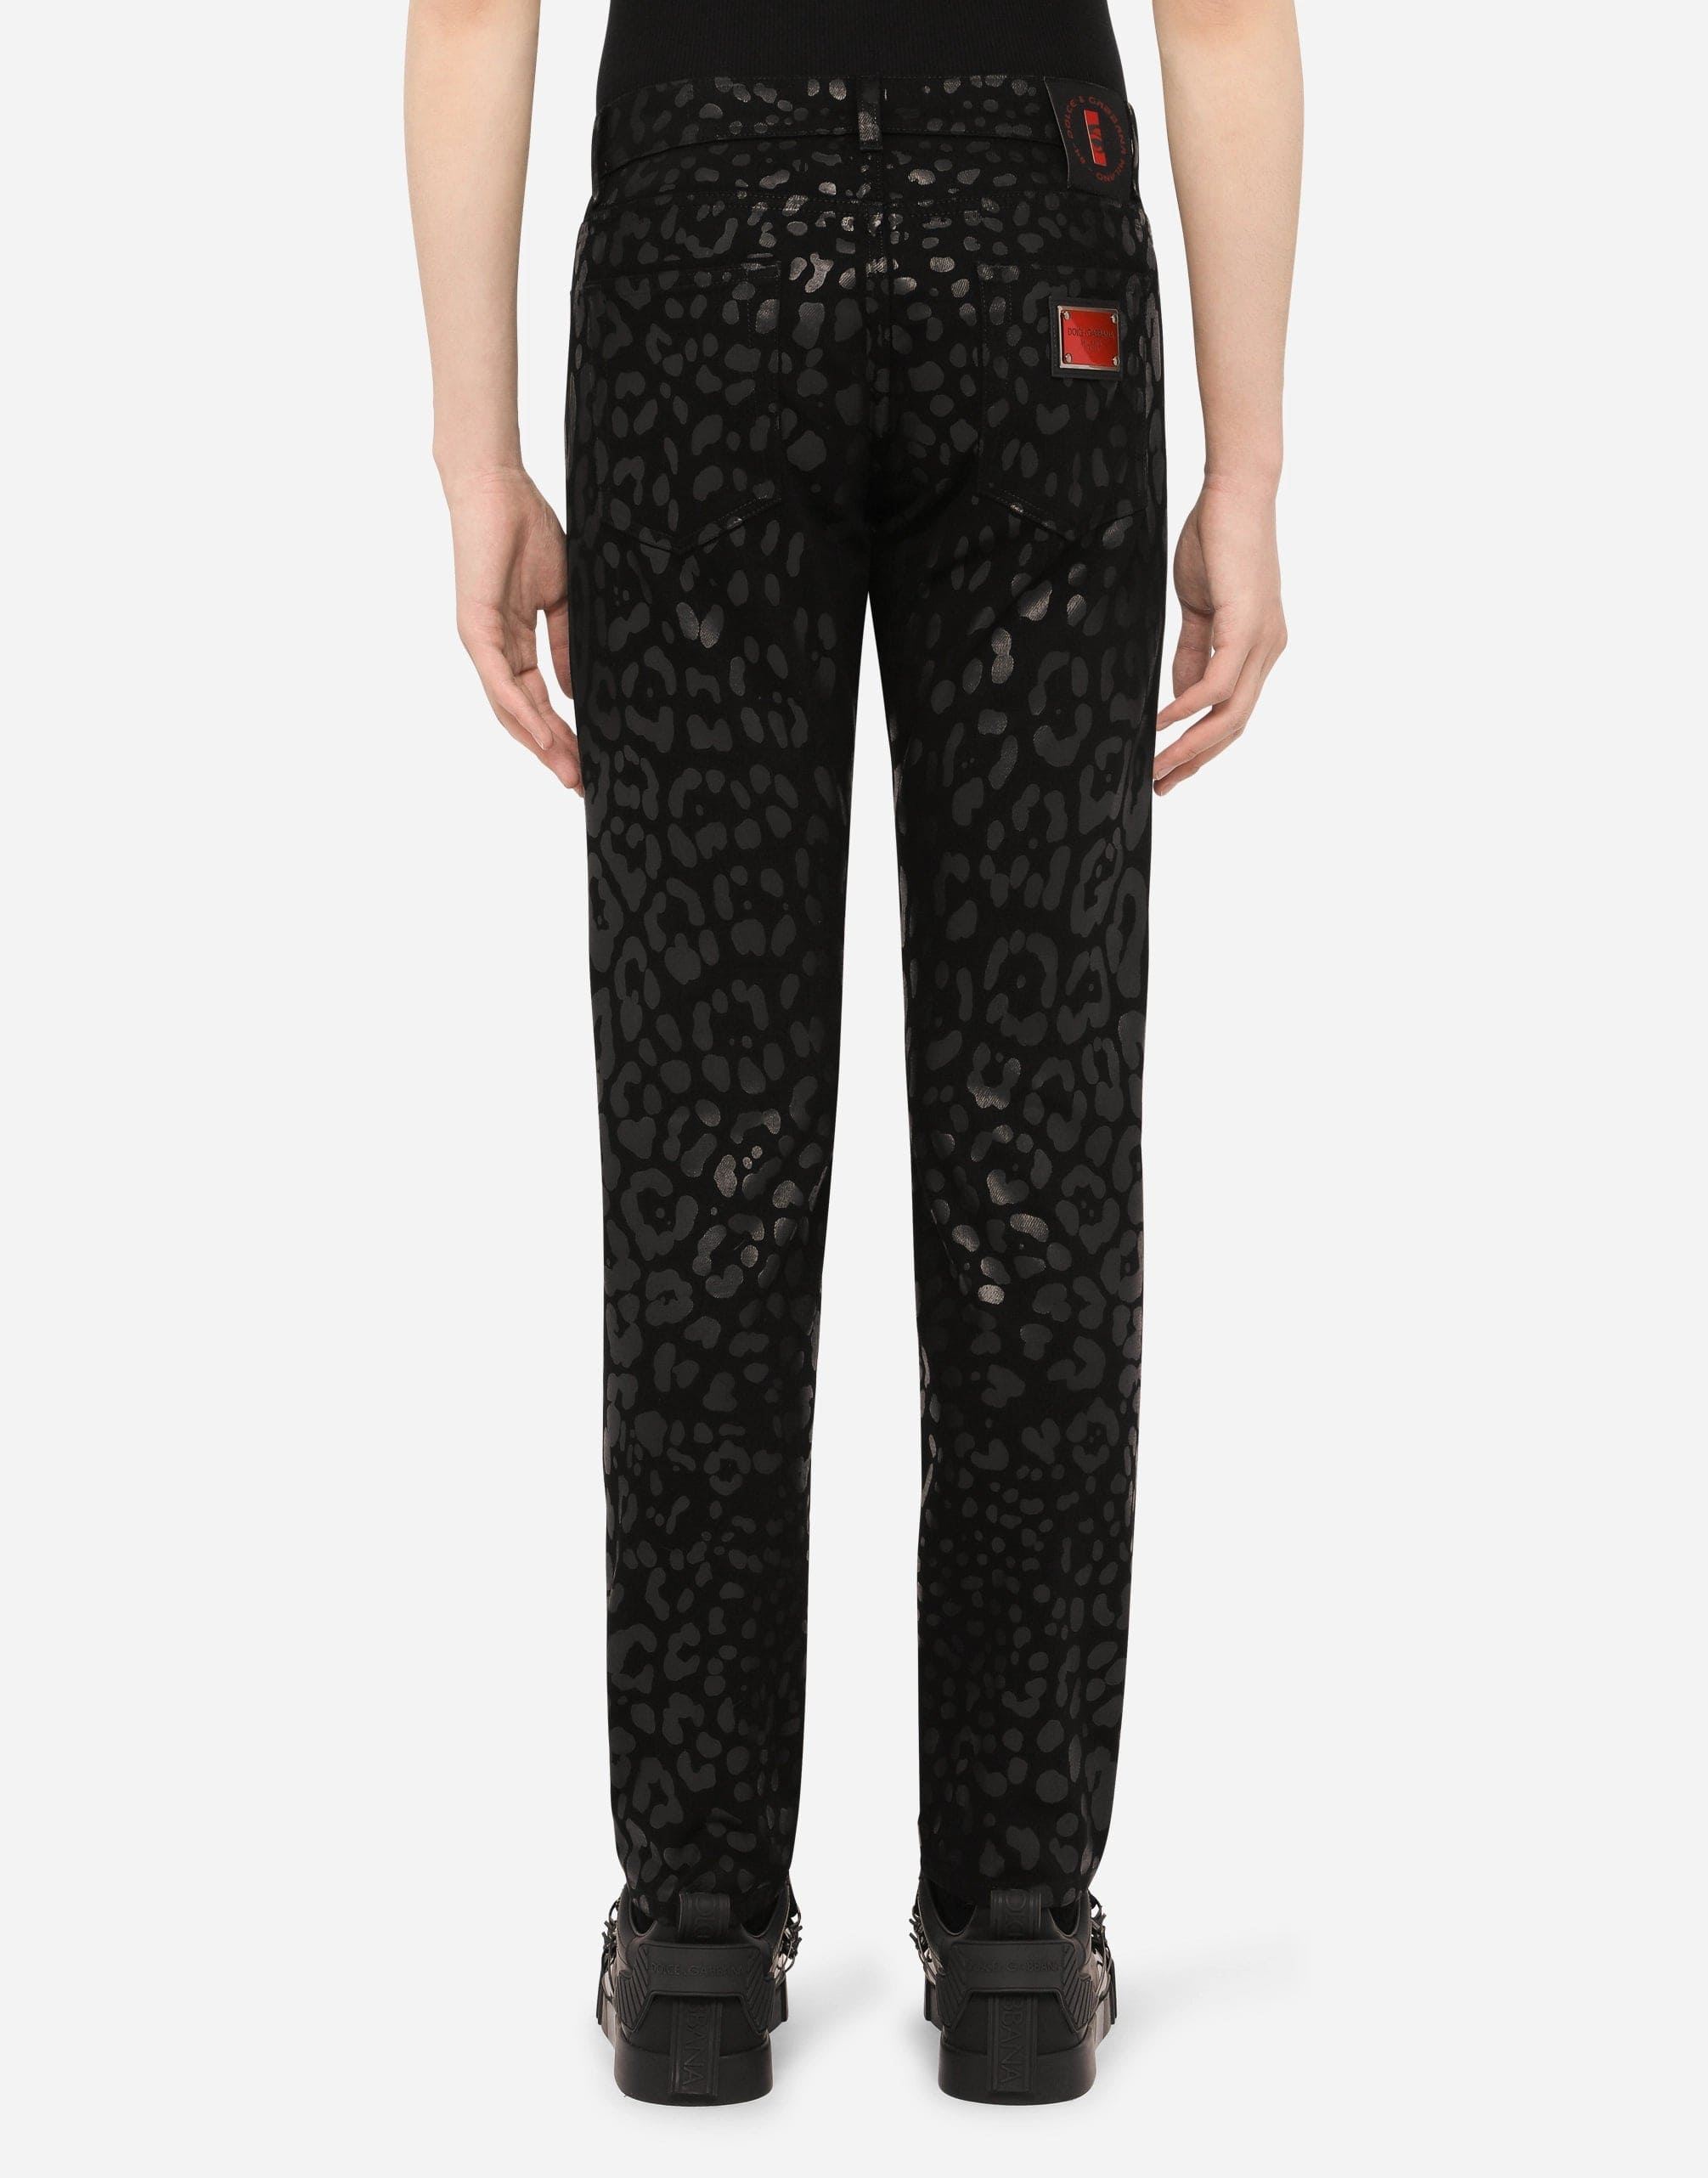 Dolce & Gabbana Flocked Leopard-Print Slim-Fit Jeans